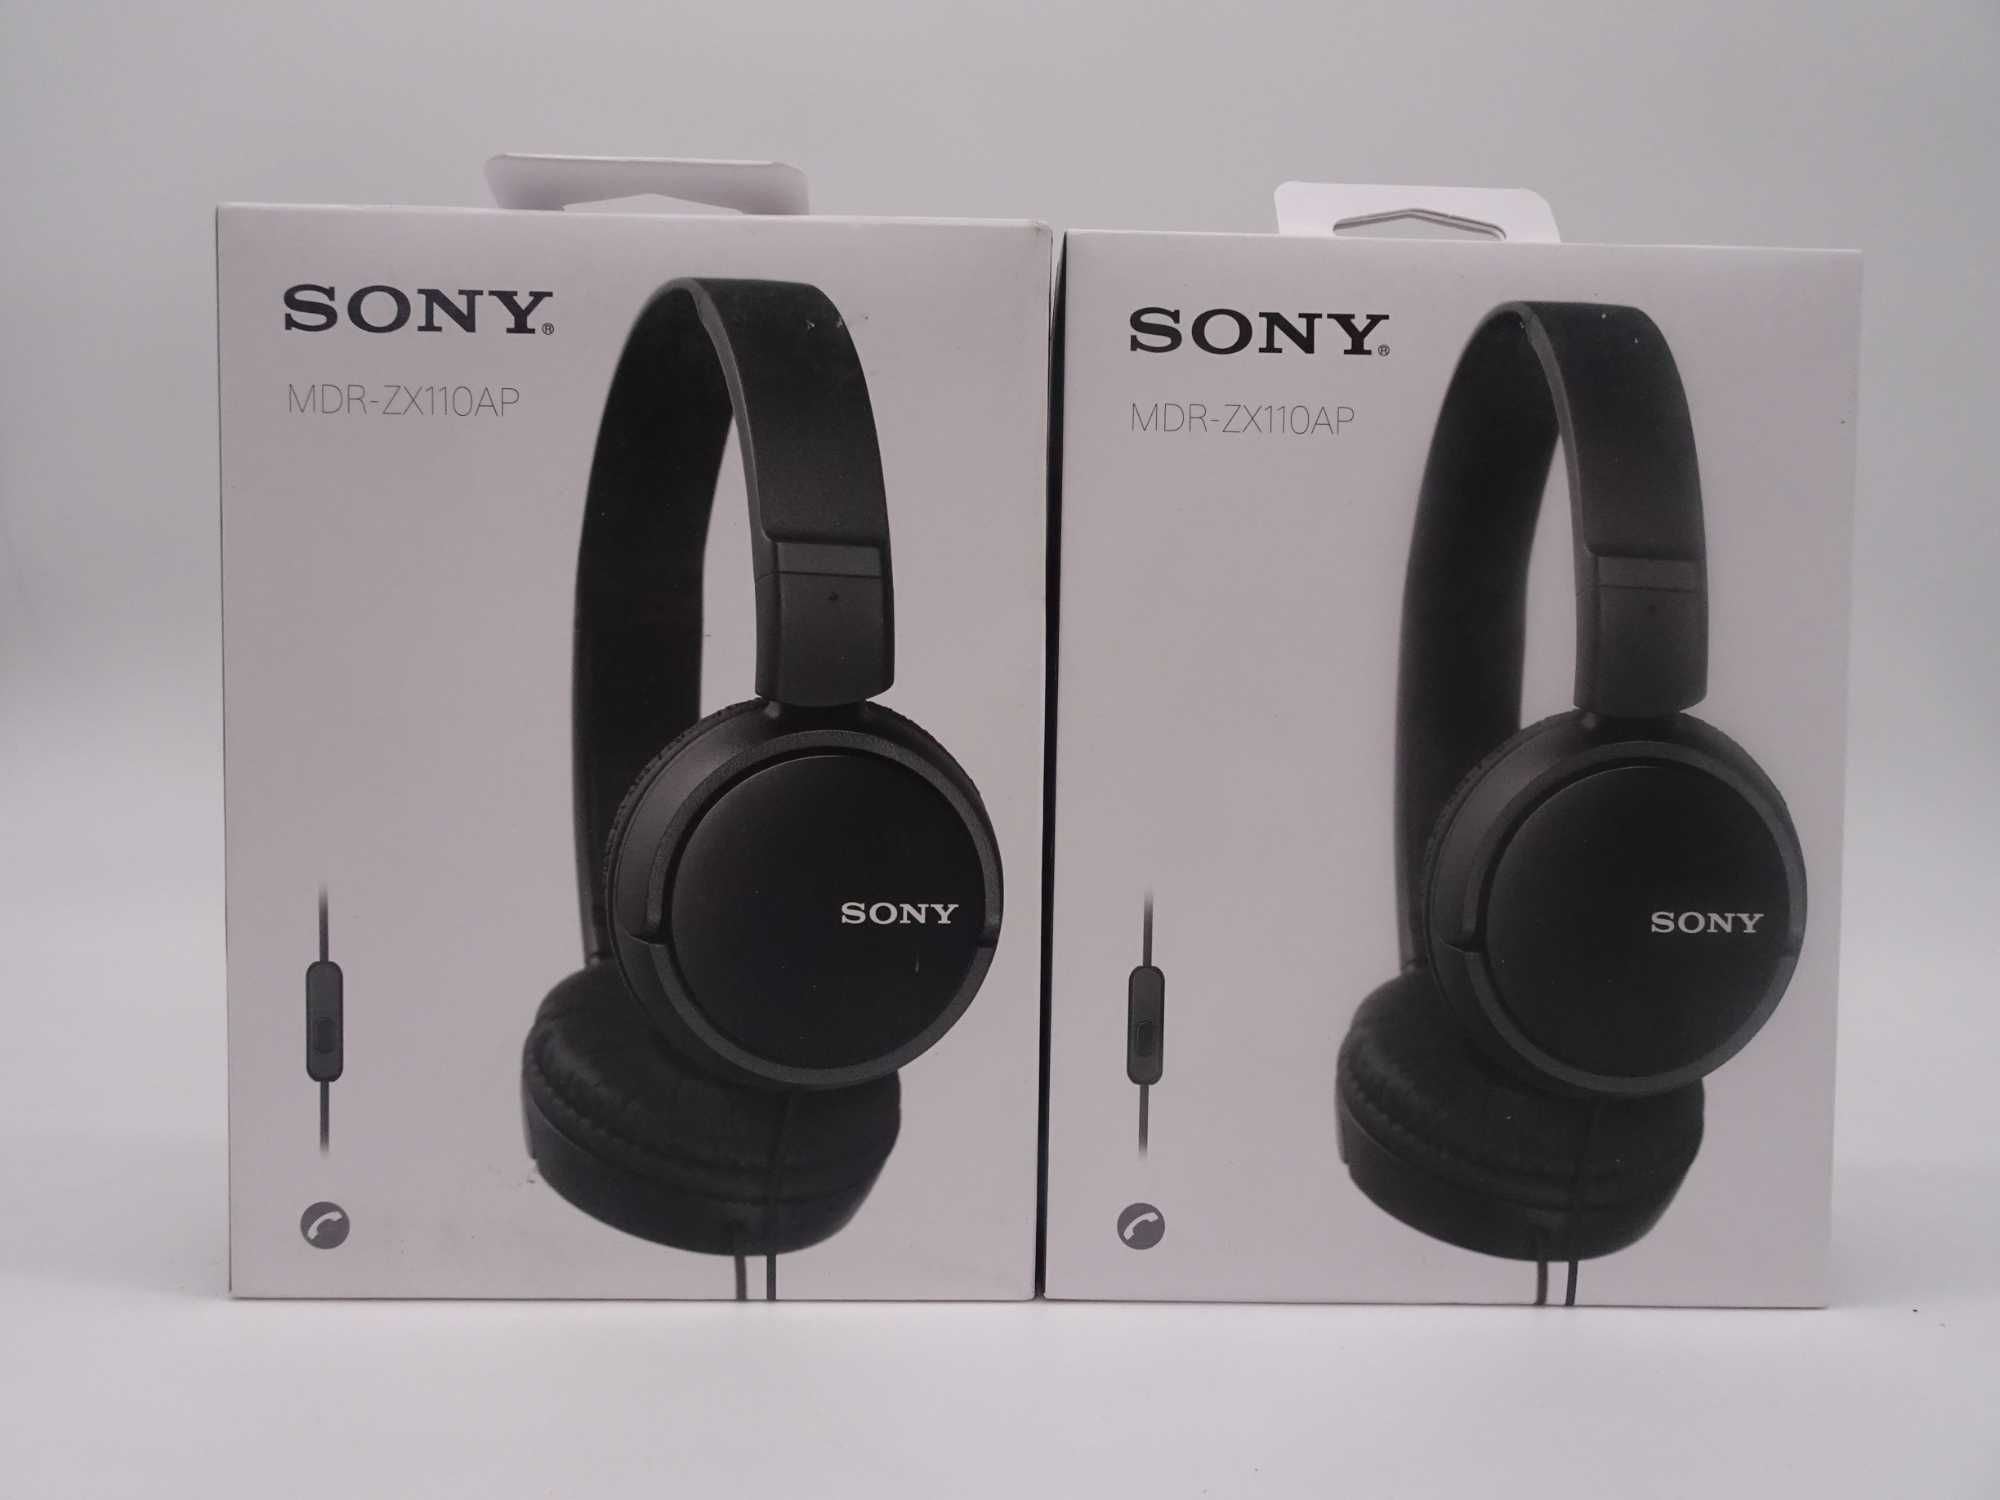 Casti audio Over-Ear Sony MDRZX110B, Negru